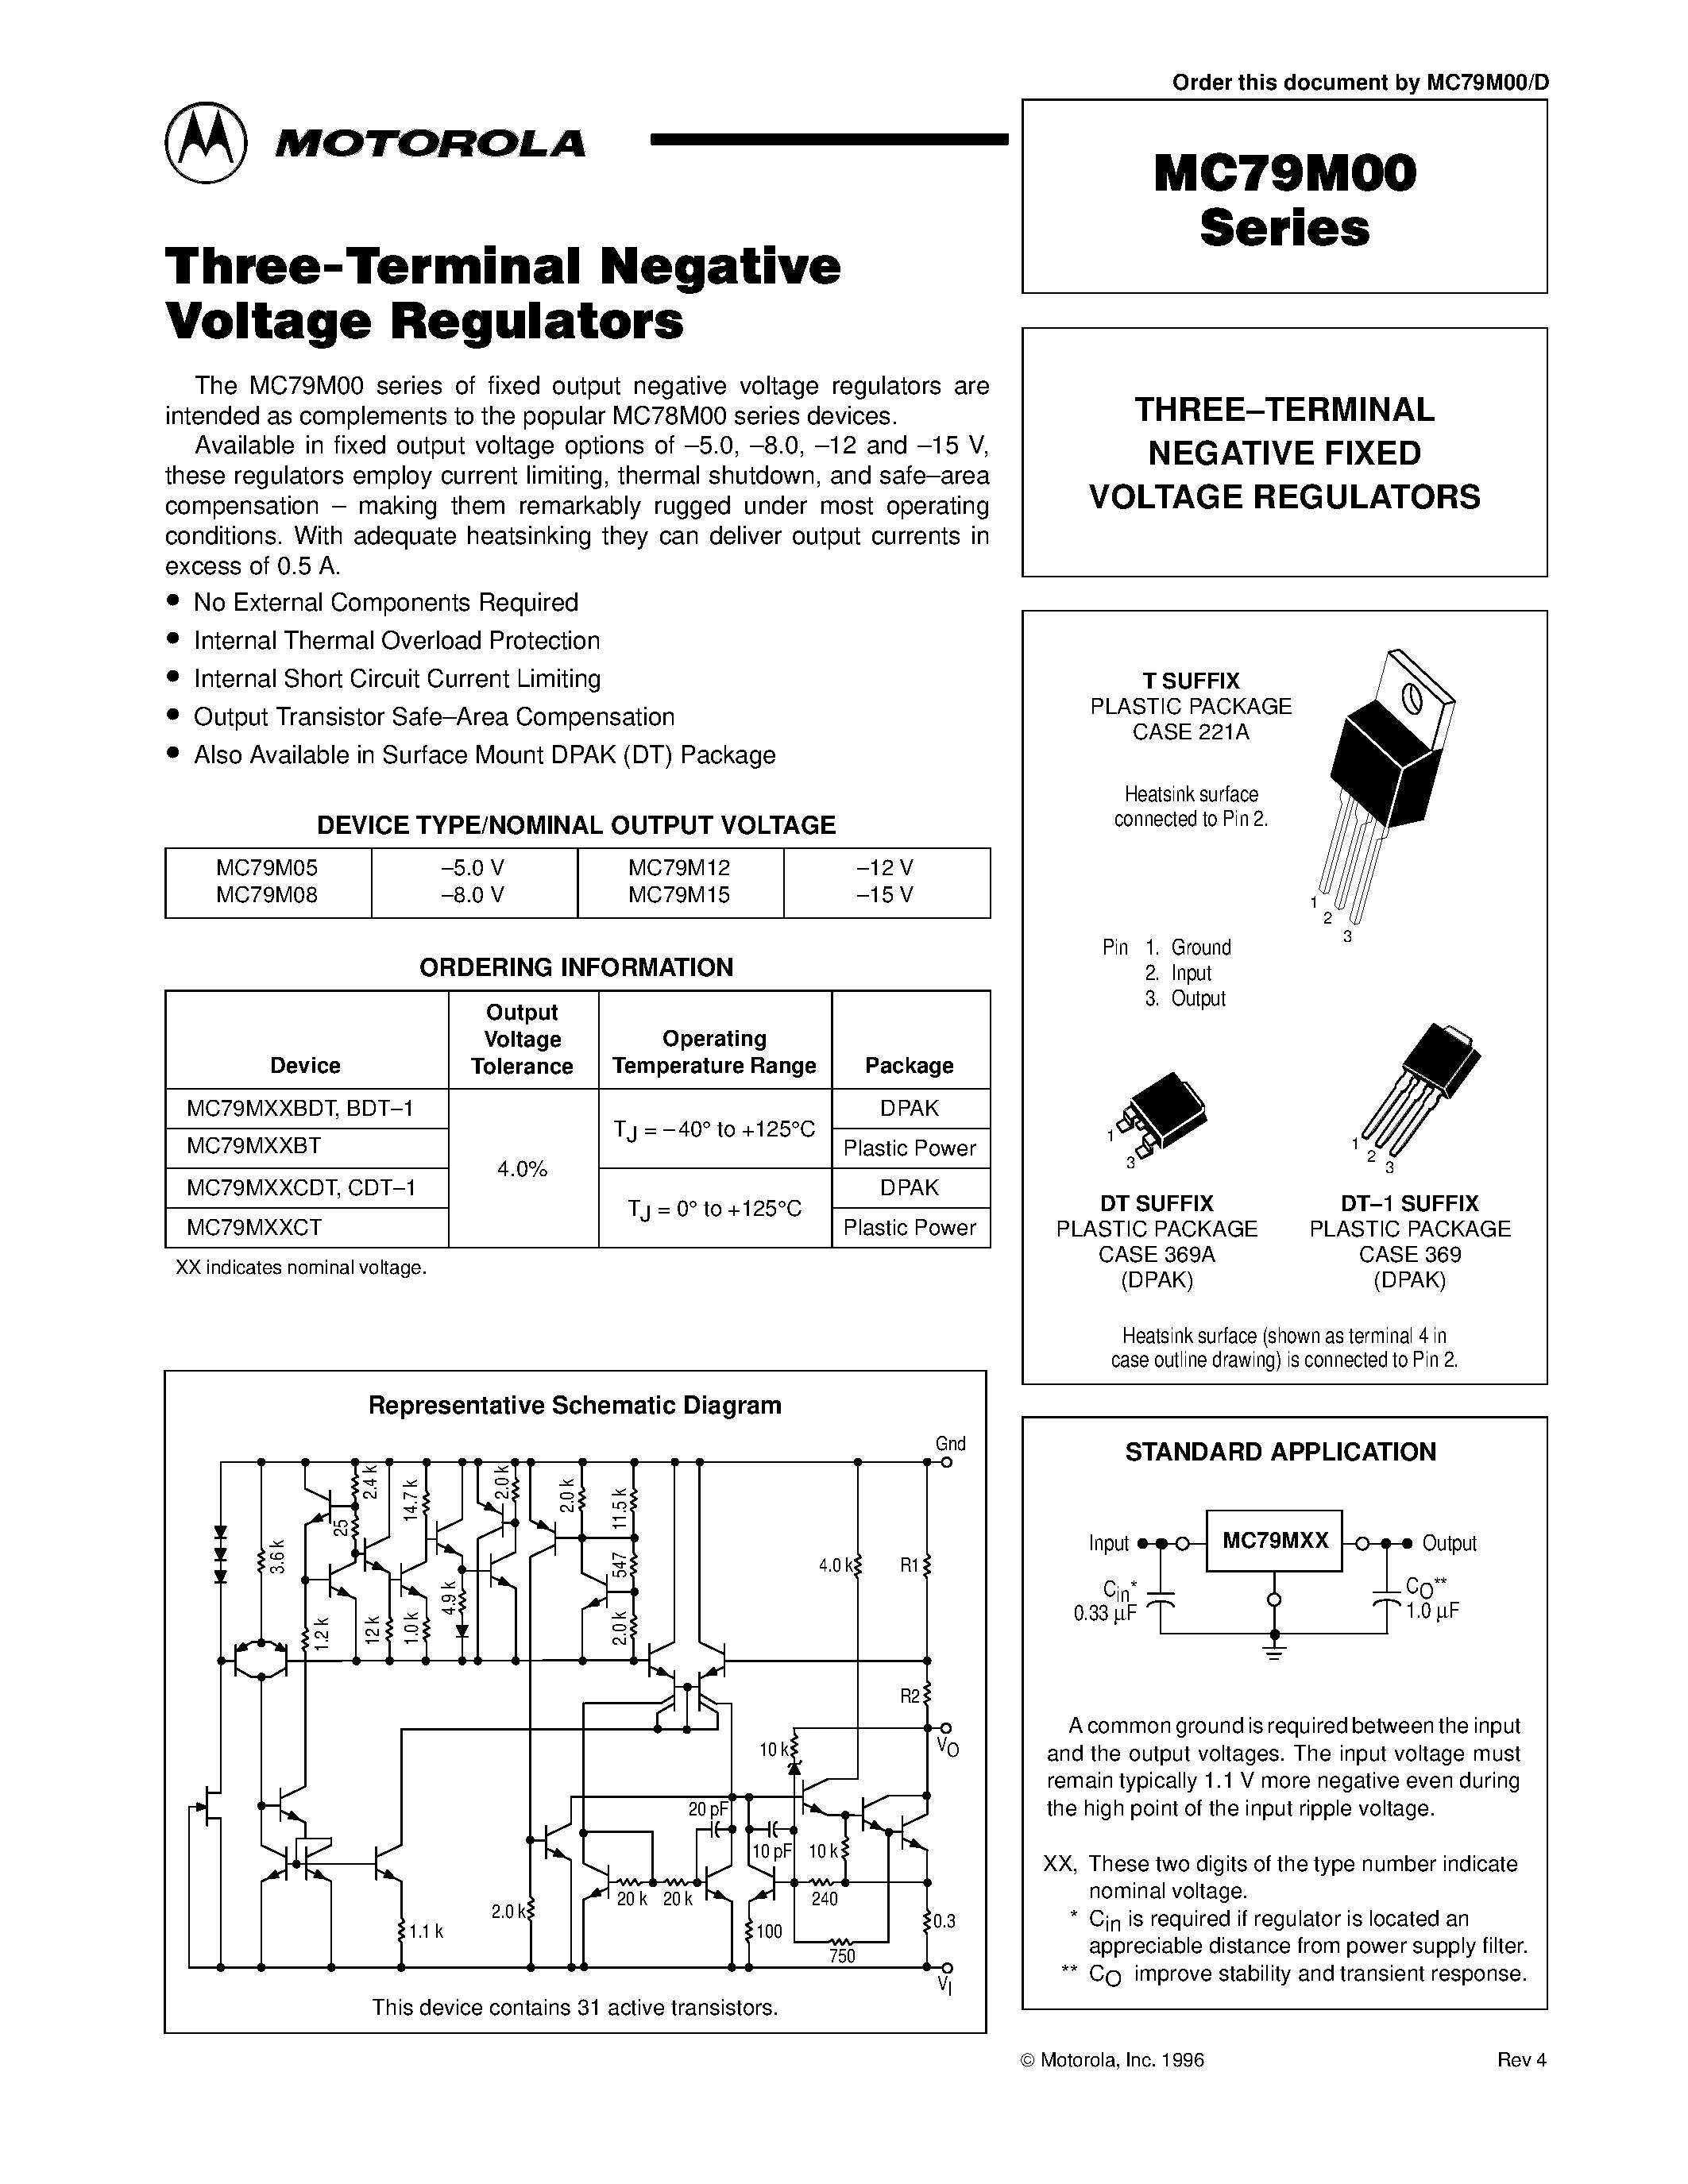 Datasheet MC79M12BDT-1 - THREE-TERMINAL NEGATIVE FIXED VOLTAGE REGULATORS page 1